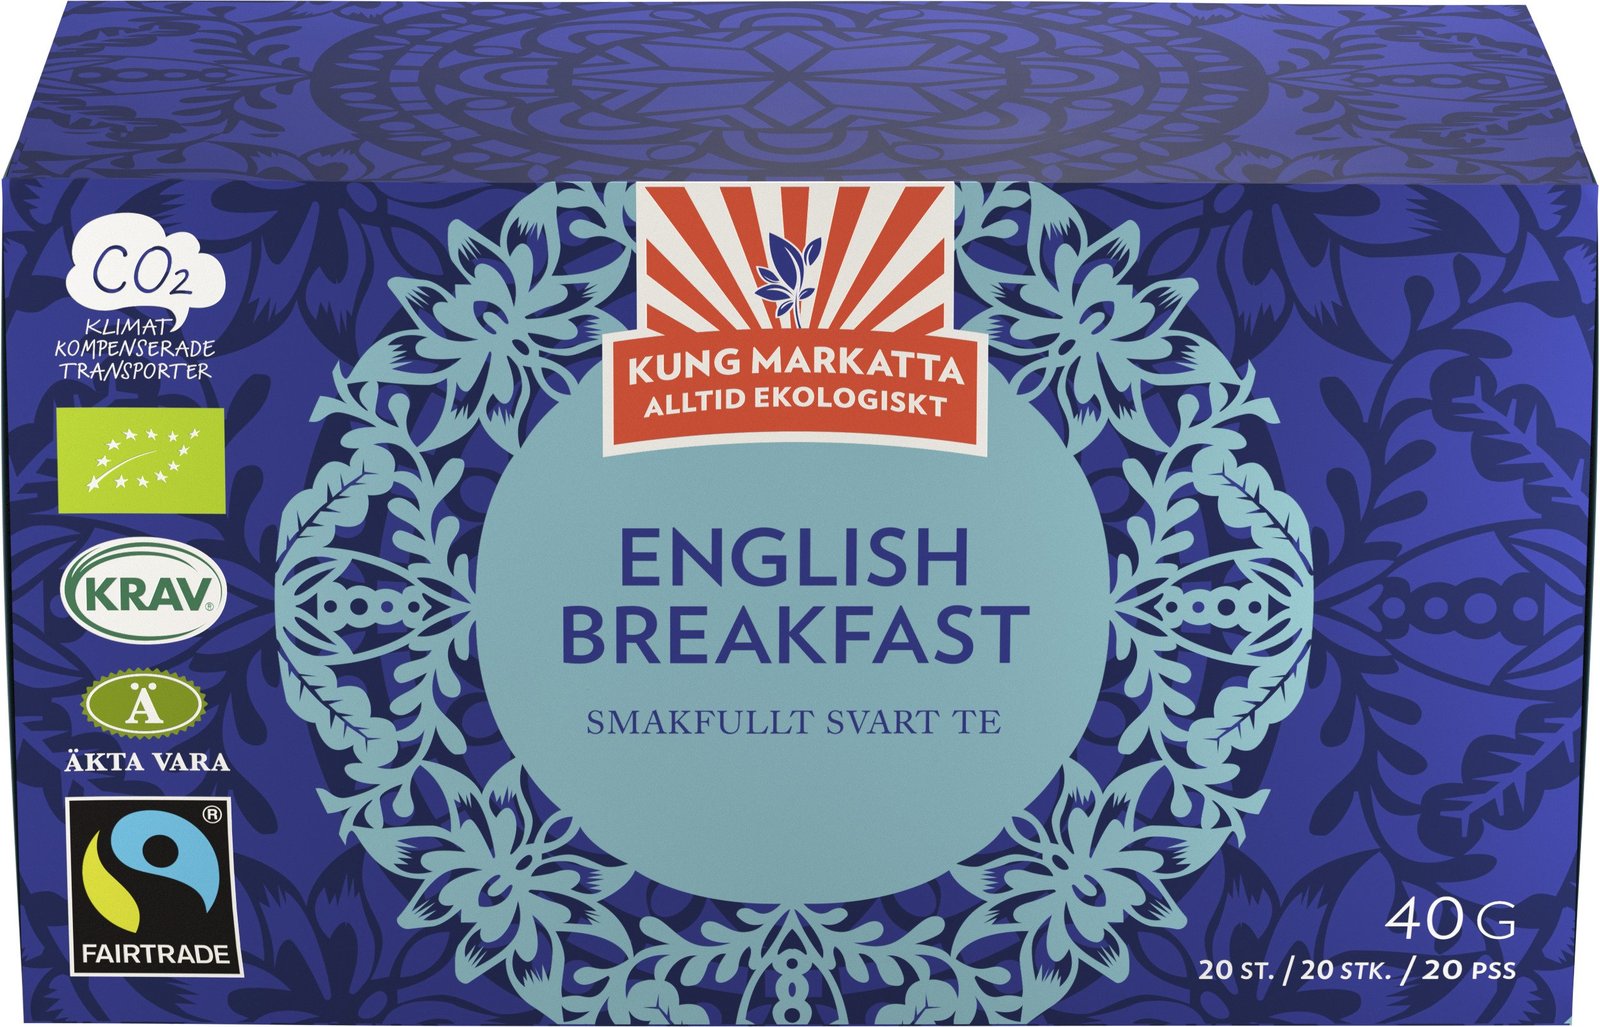 Kung Markatta English Breakfast 20st